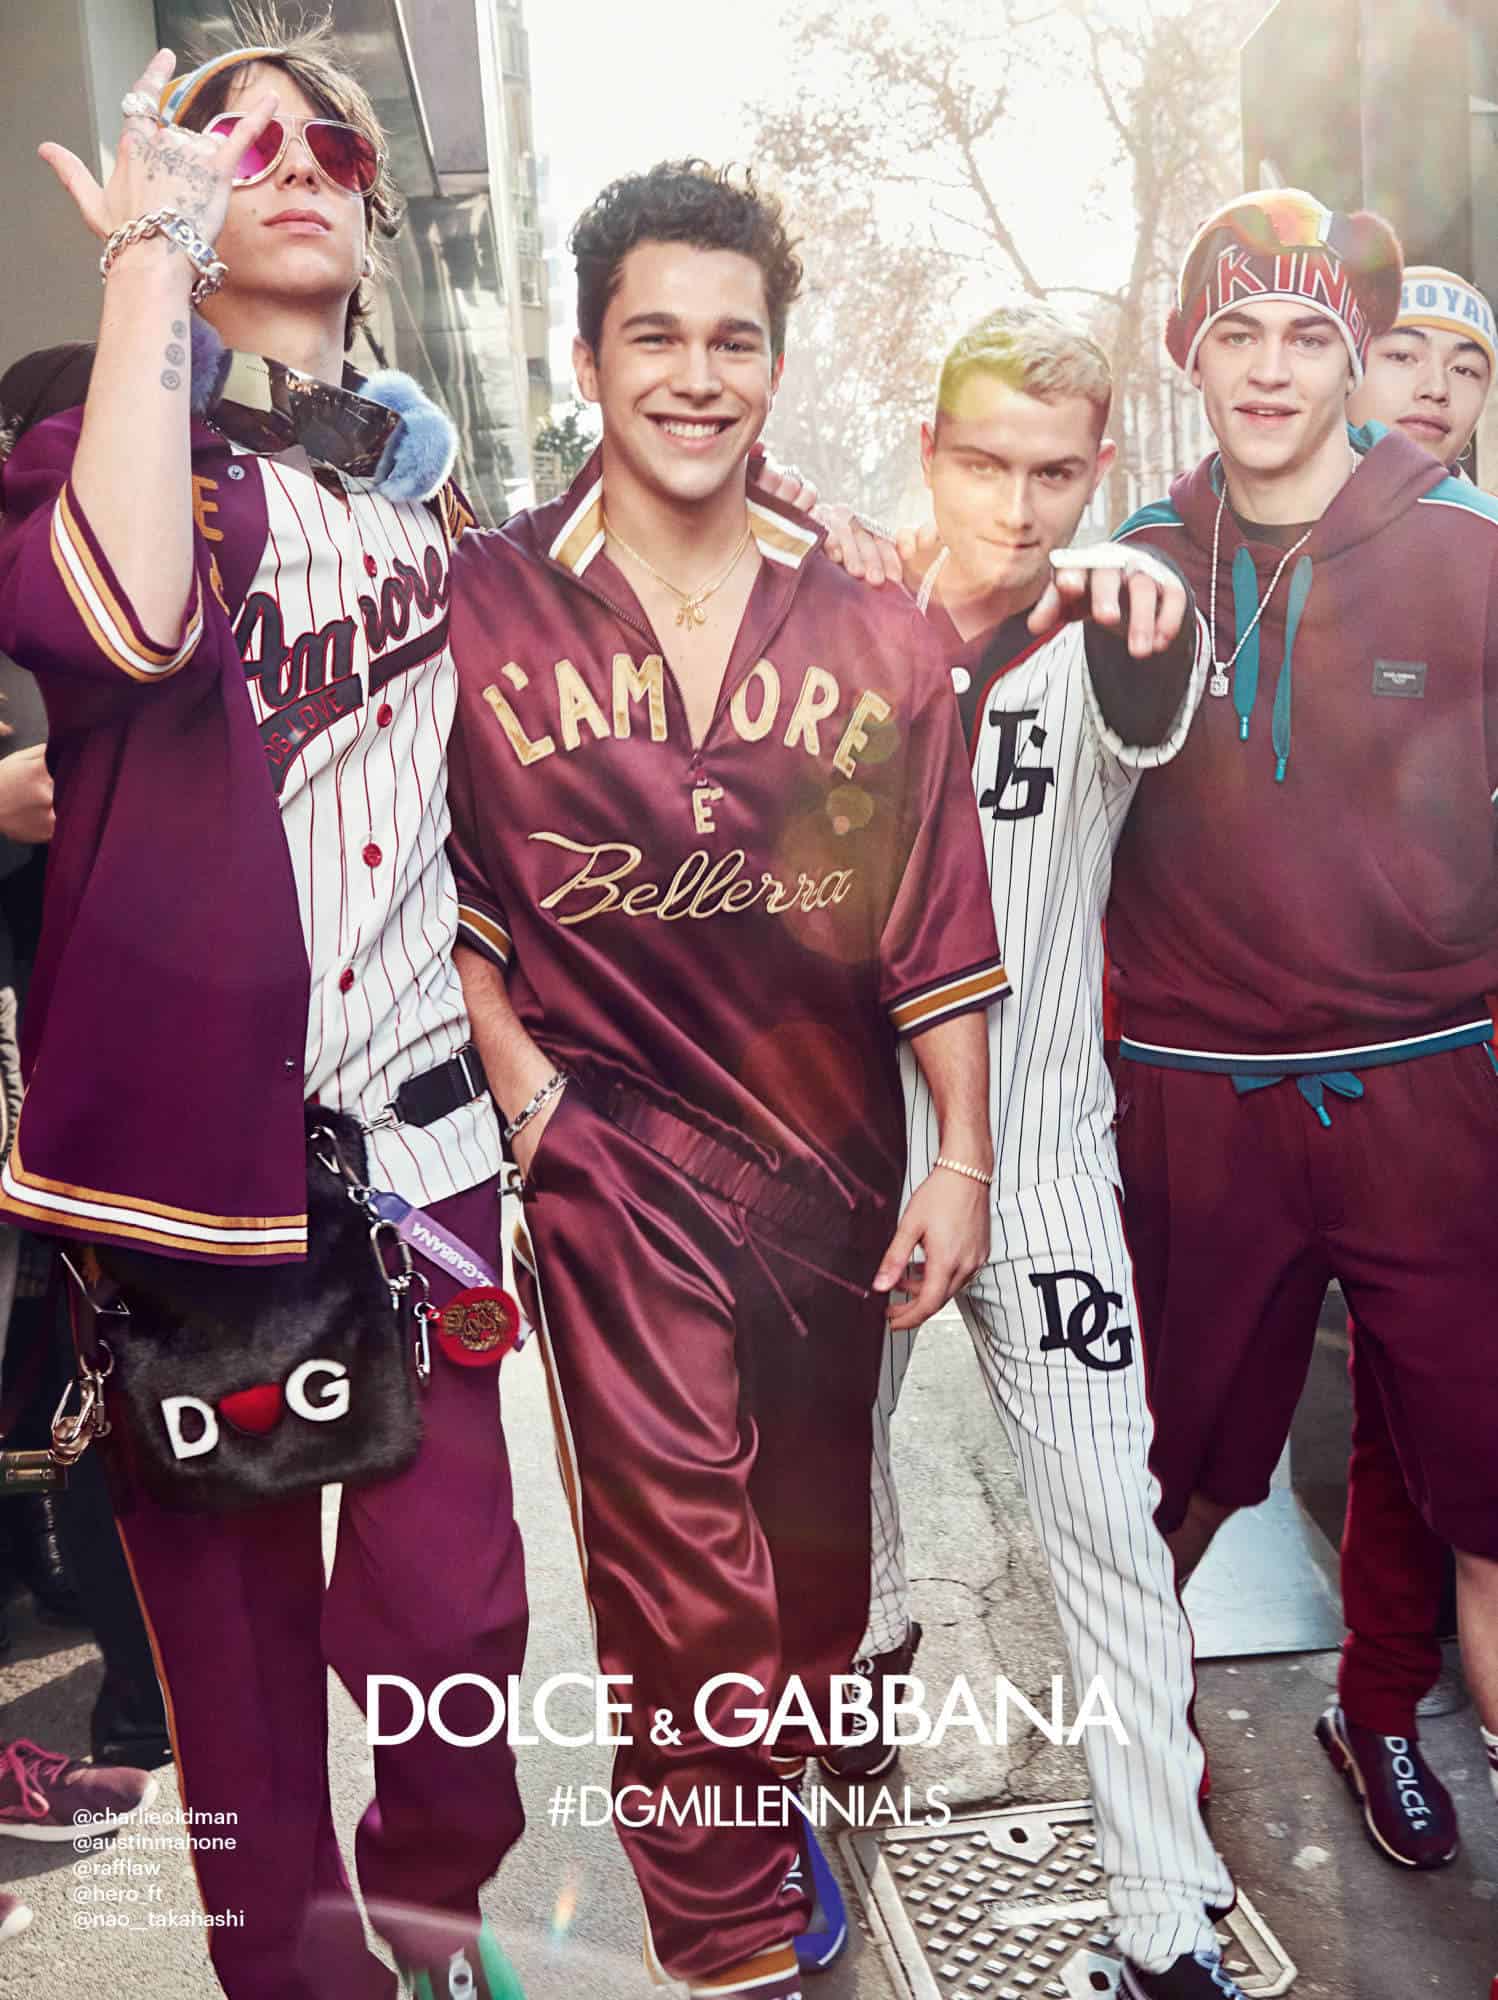 Dolce \u0026 Gabbana's New Campaign is 